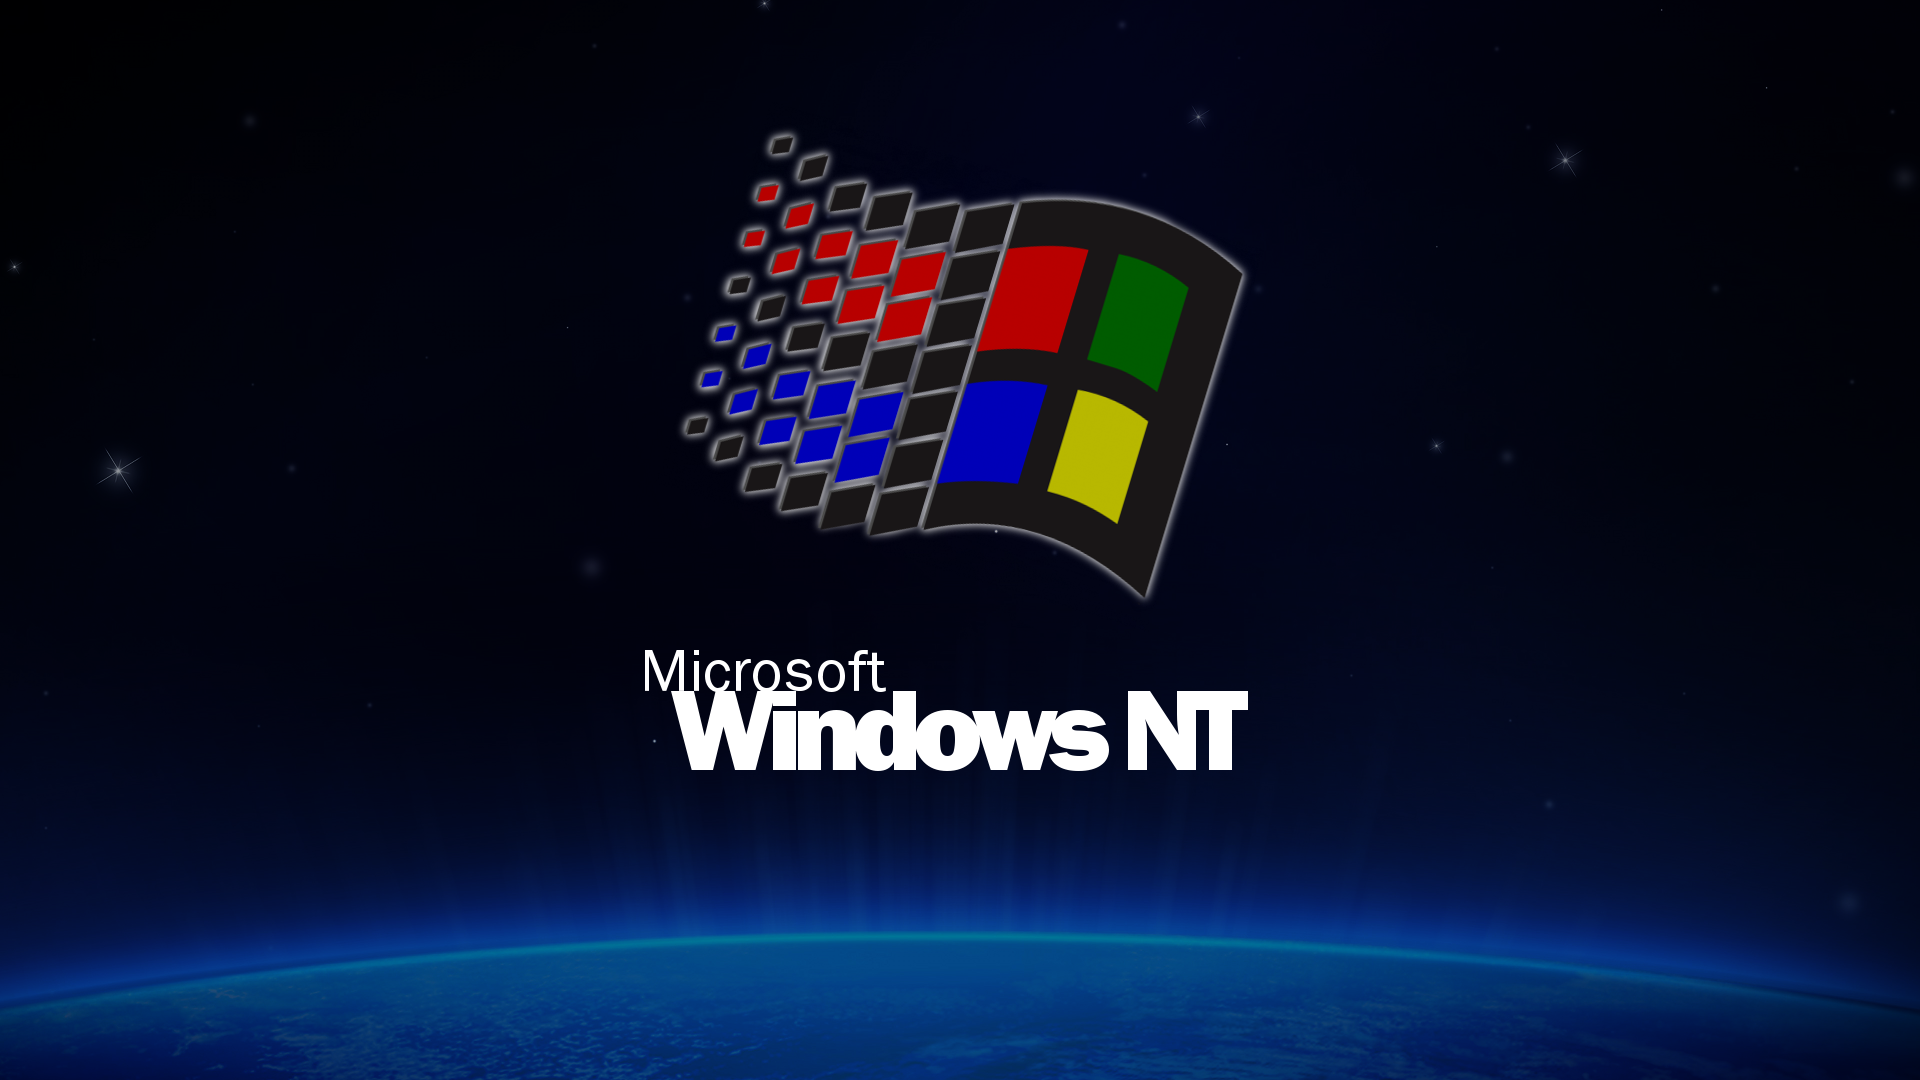 Windows nt workstation. Windows NT 4 Workstation. Виндовс НТ 4.0. ОС MS Windows NT 4.0 Server. Windows NT 3.1 Workstation.